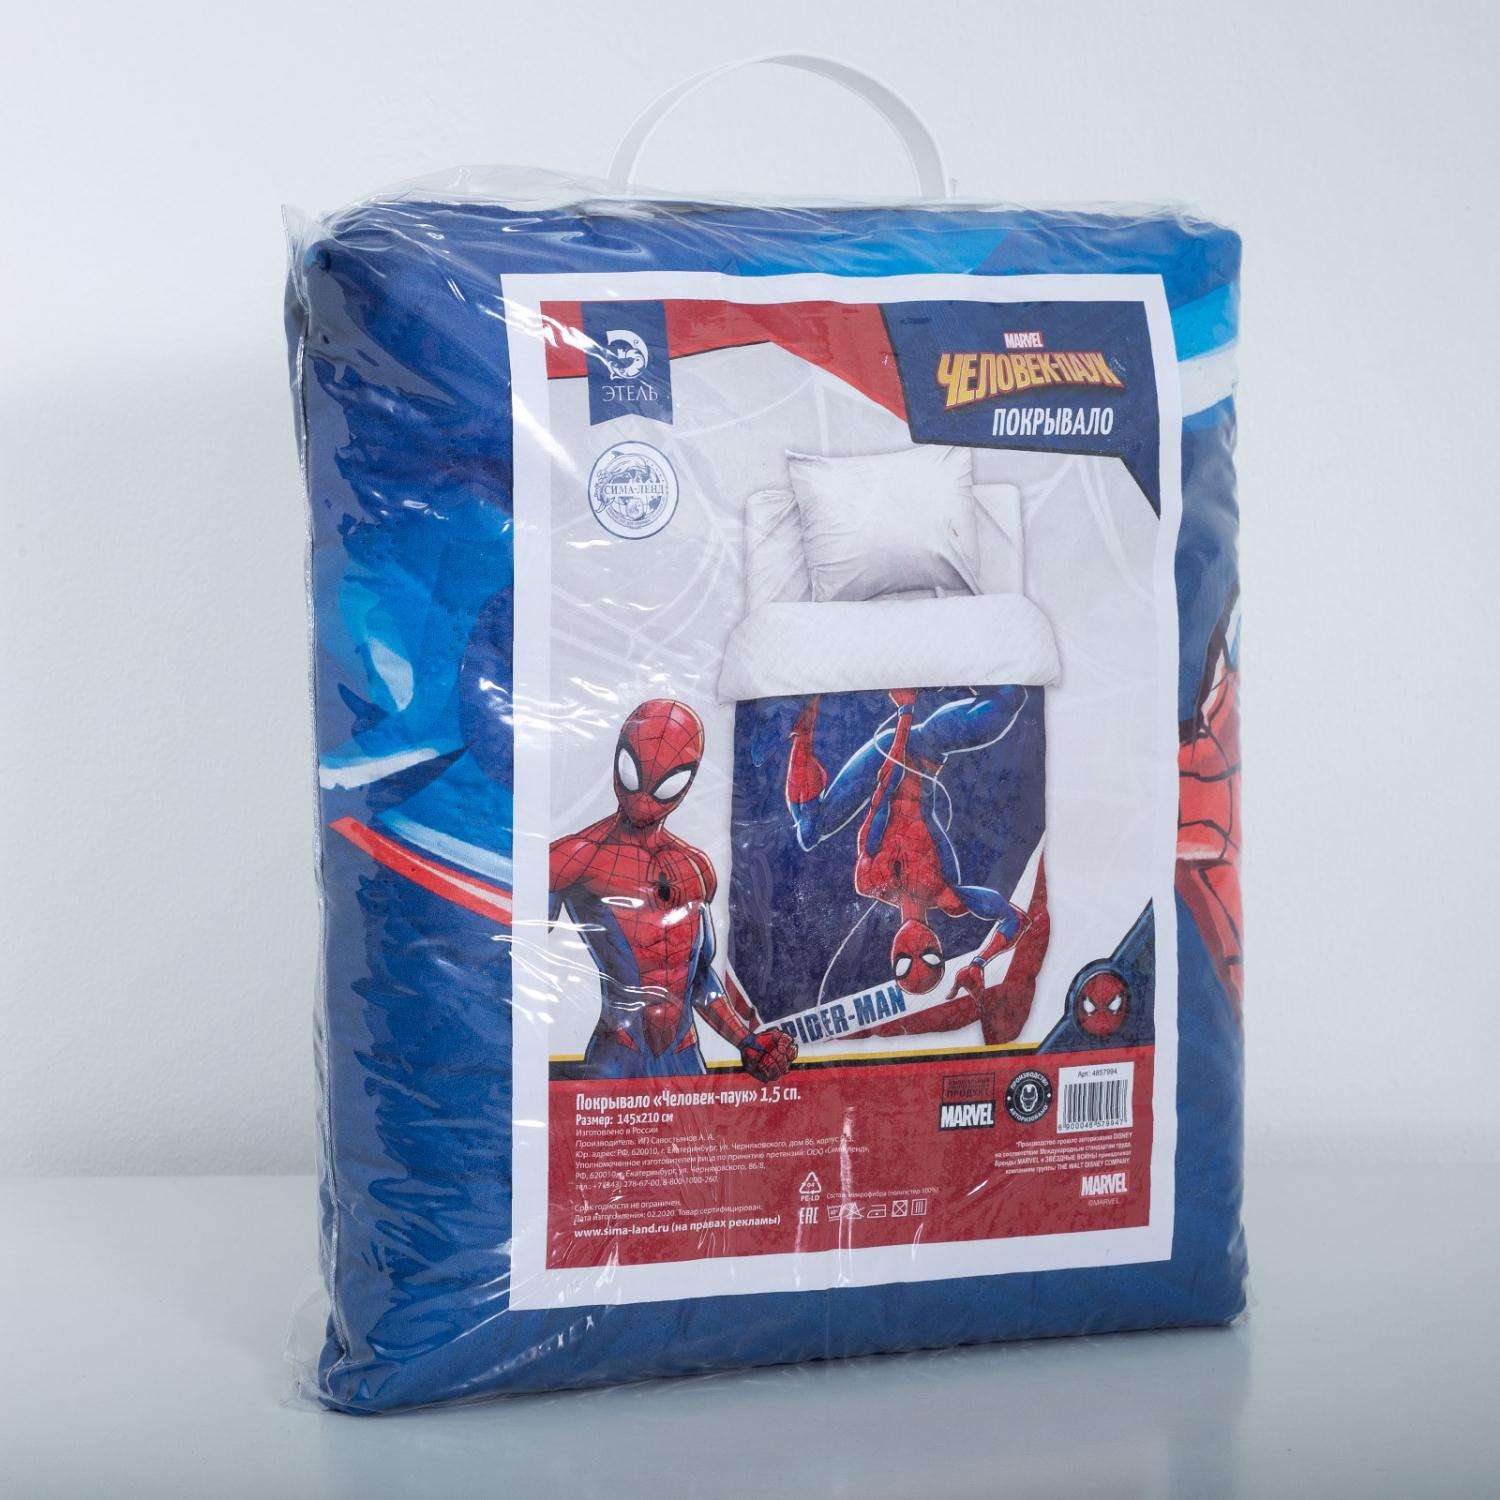 Покрывало Marvel Человек паук - фото 3